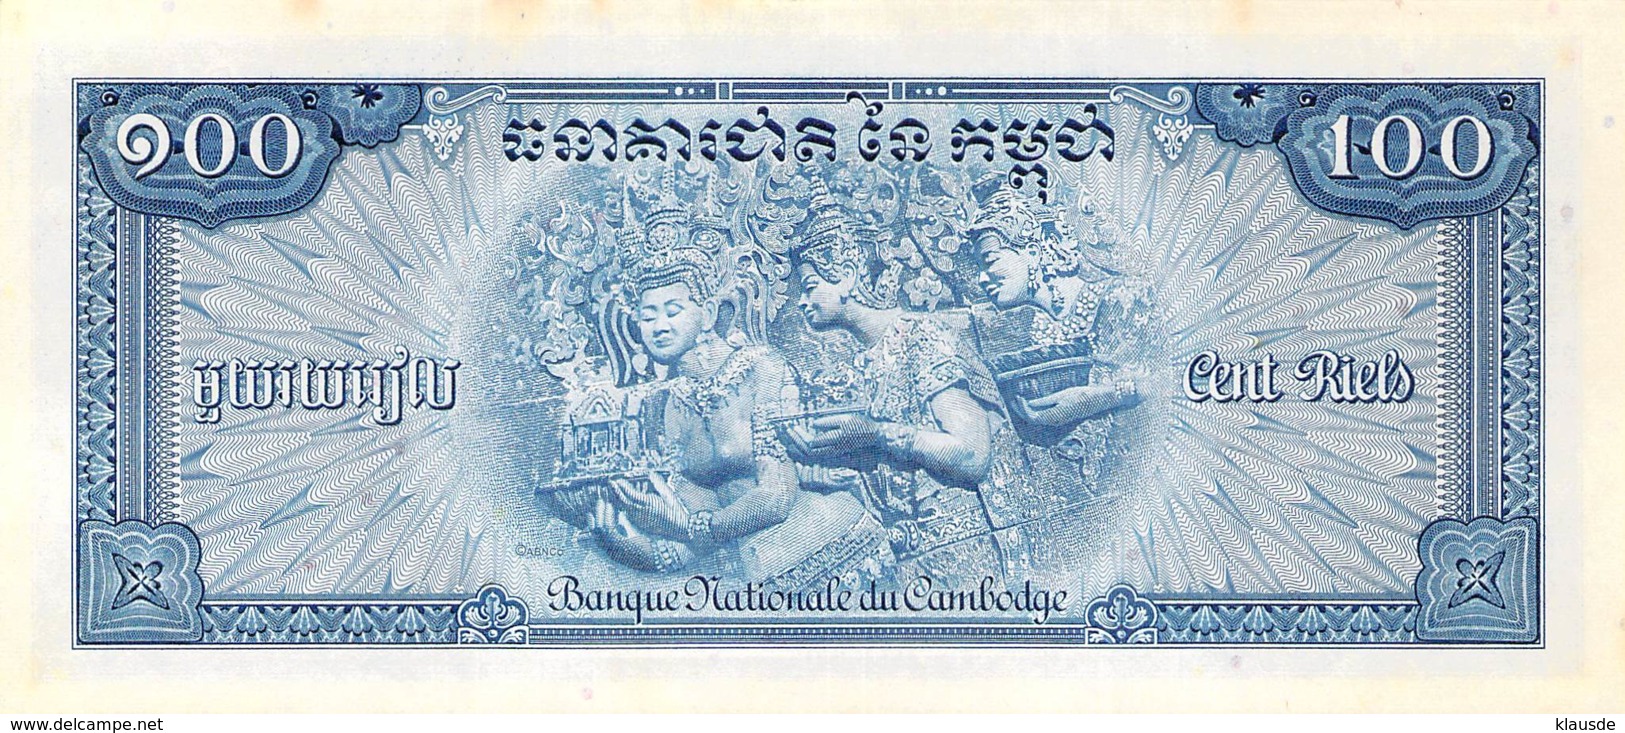 100 Cent Riels Banknote Kambodscha - Kambodscha